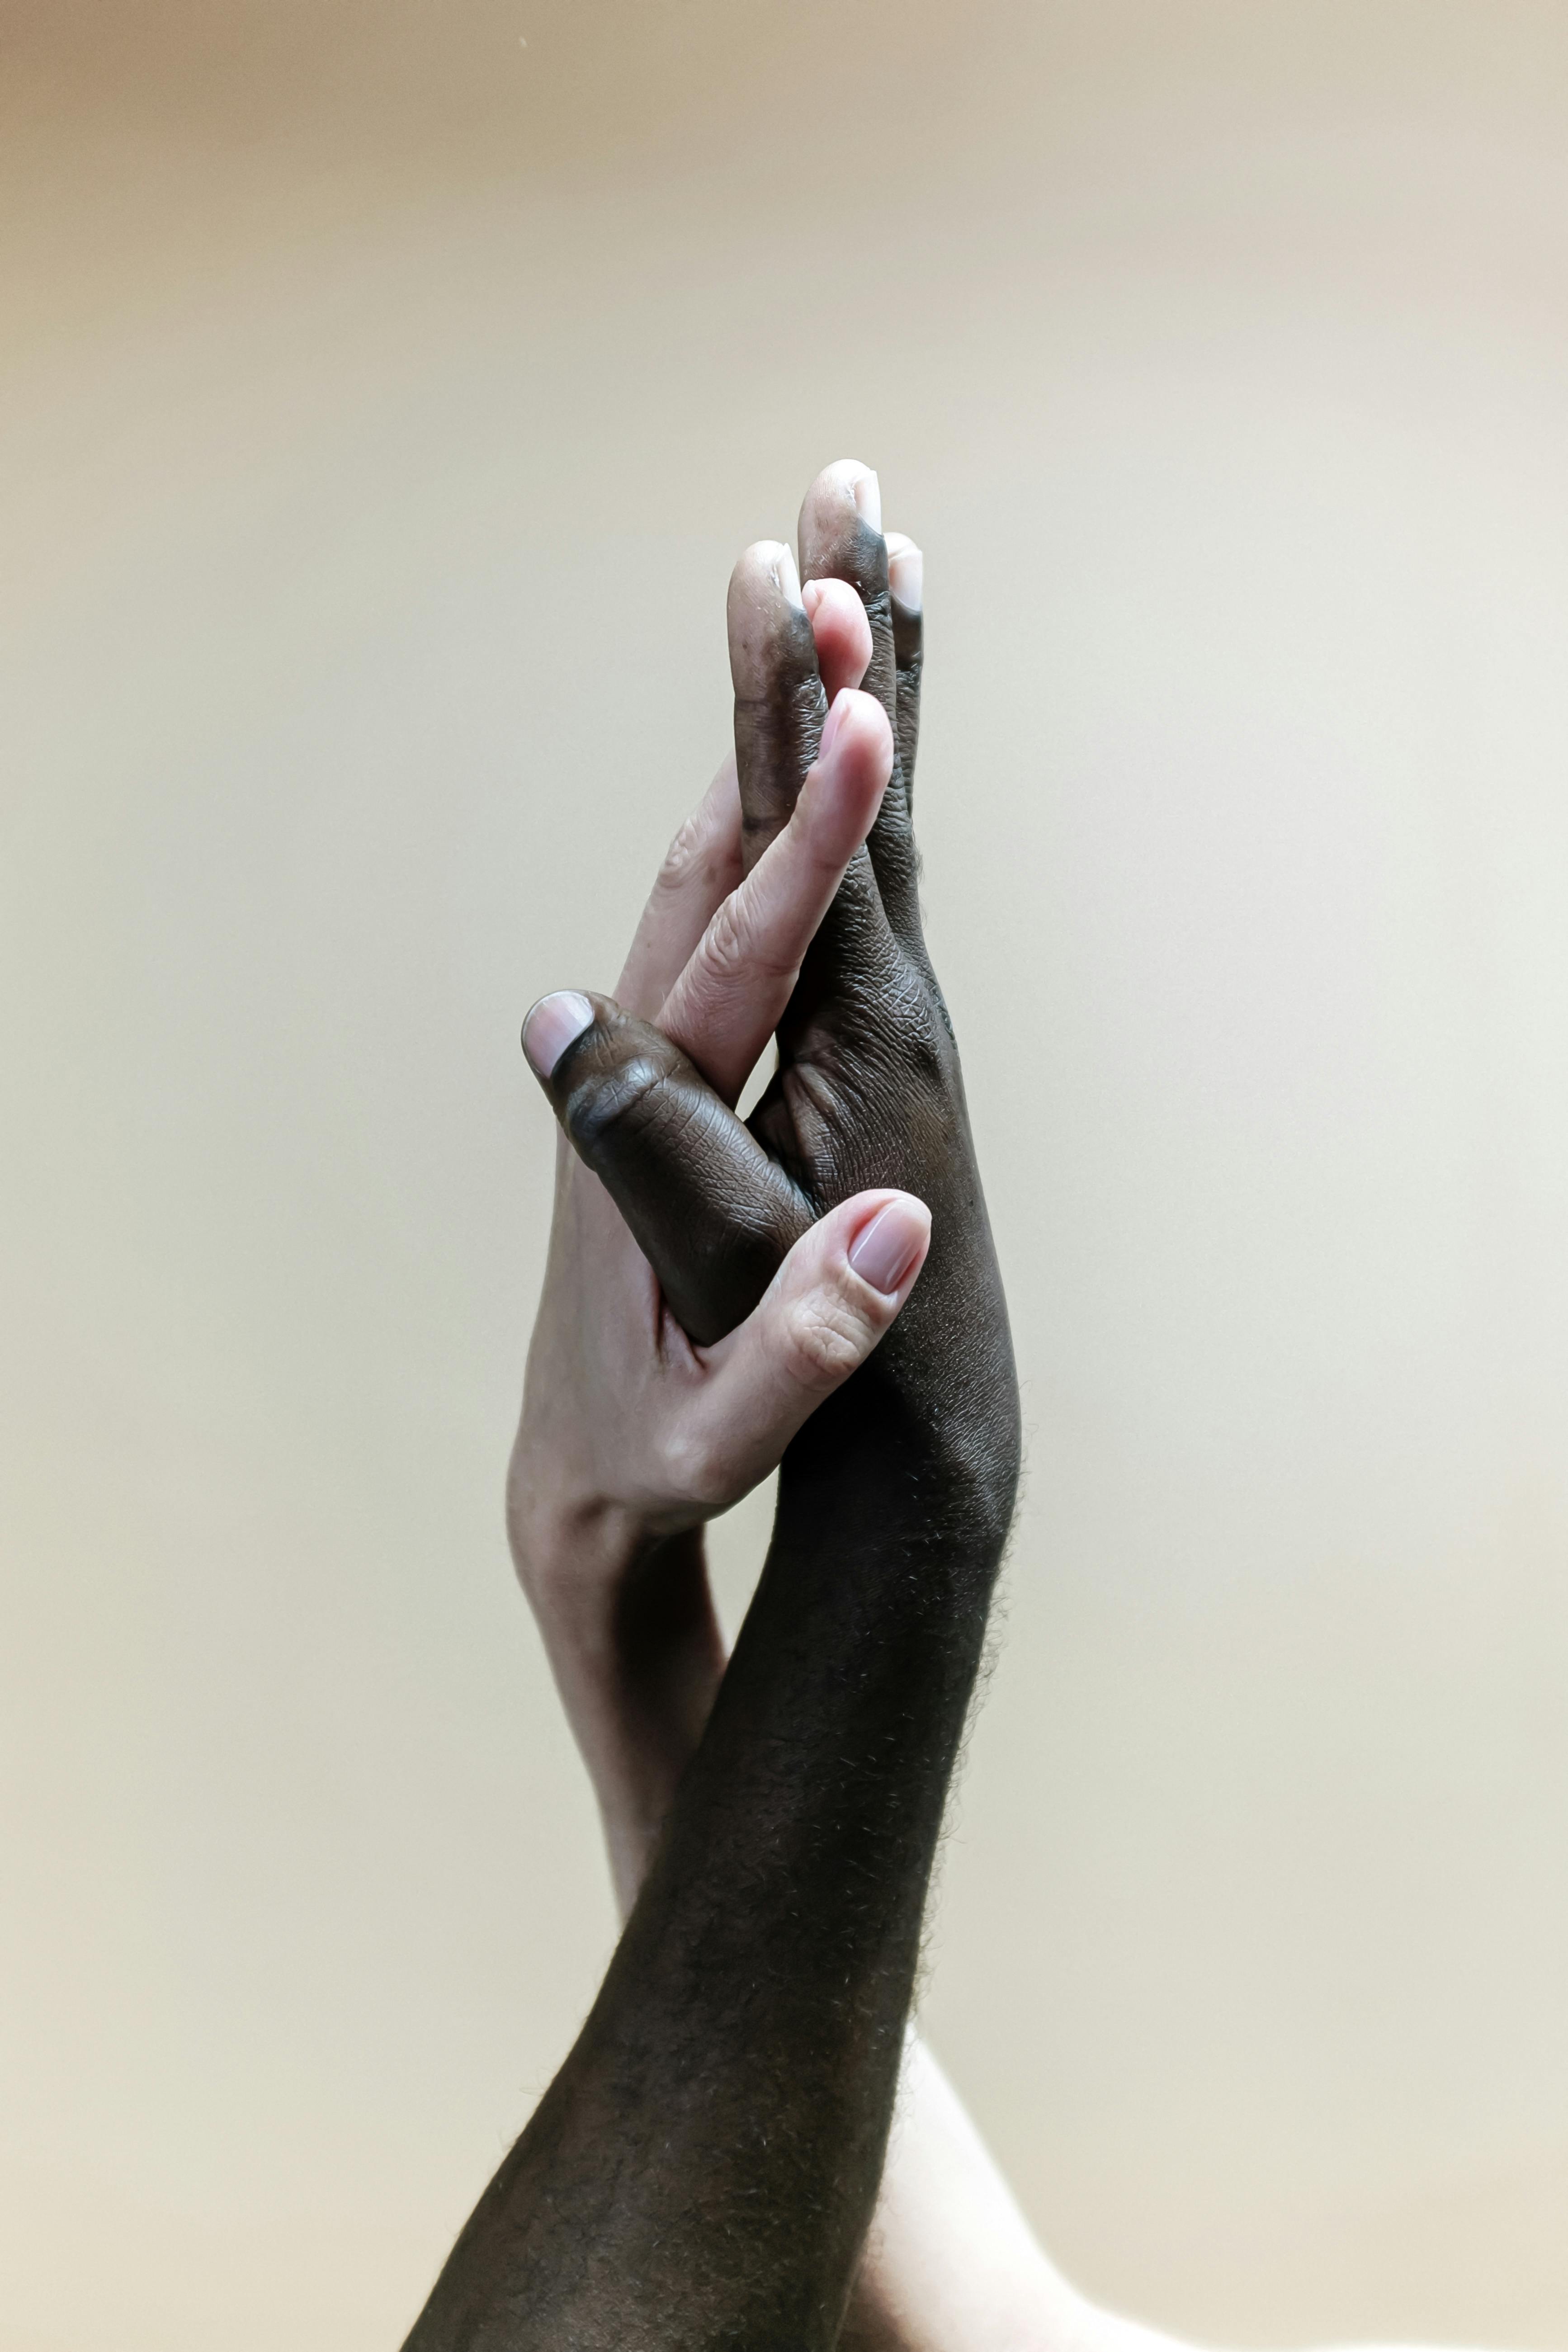 photo of people s hands